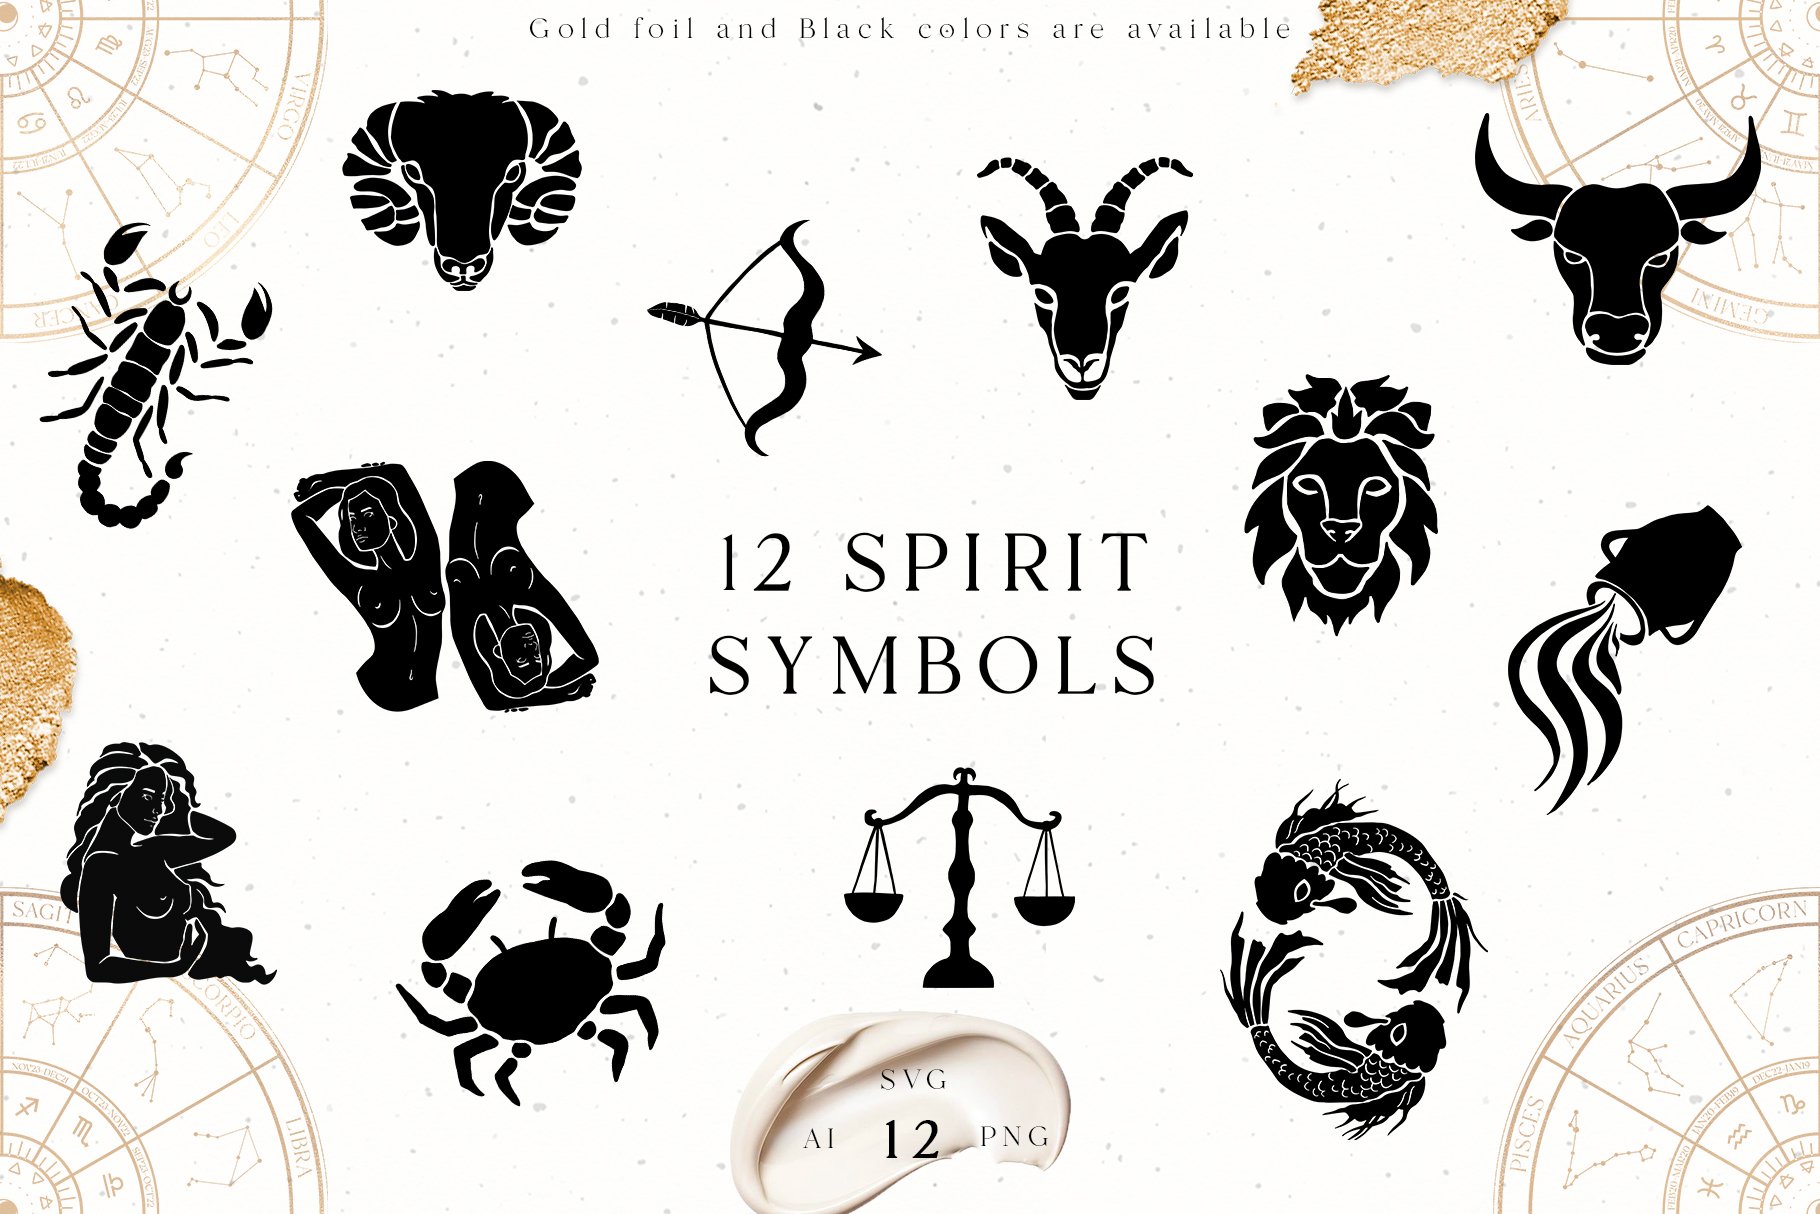 There are 12 spirit symbols.